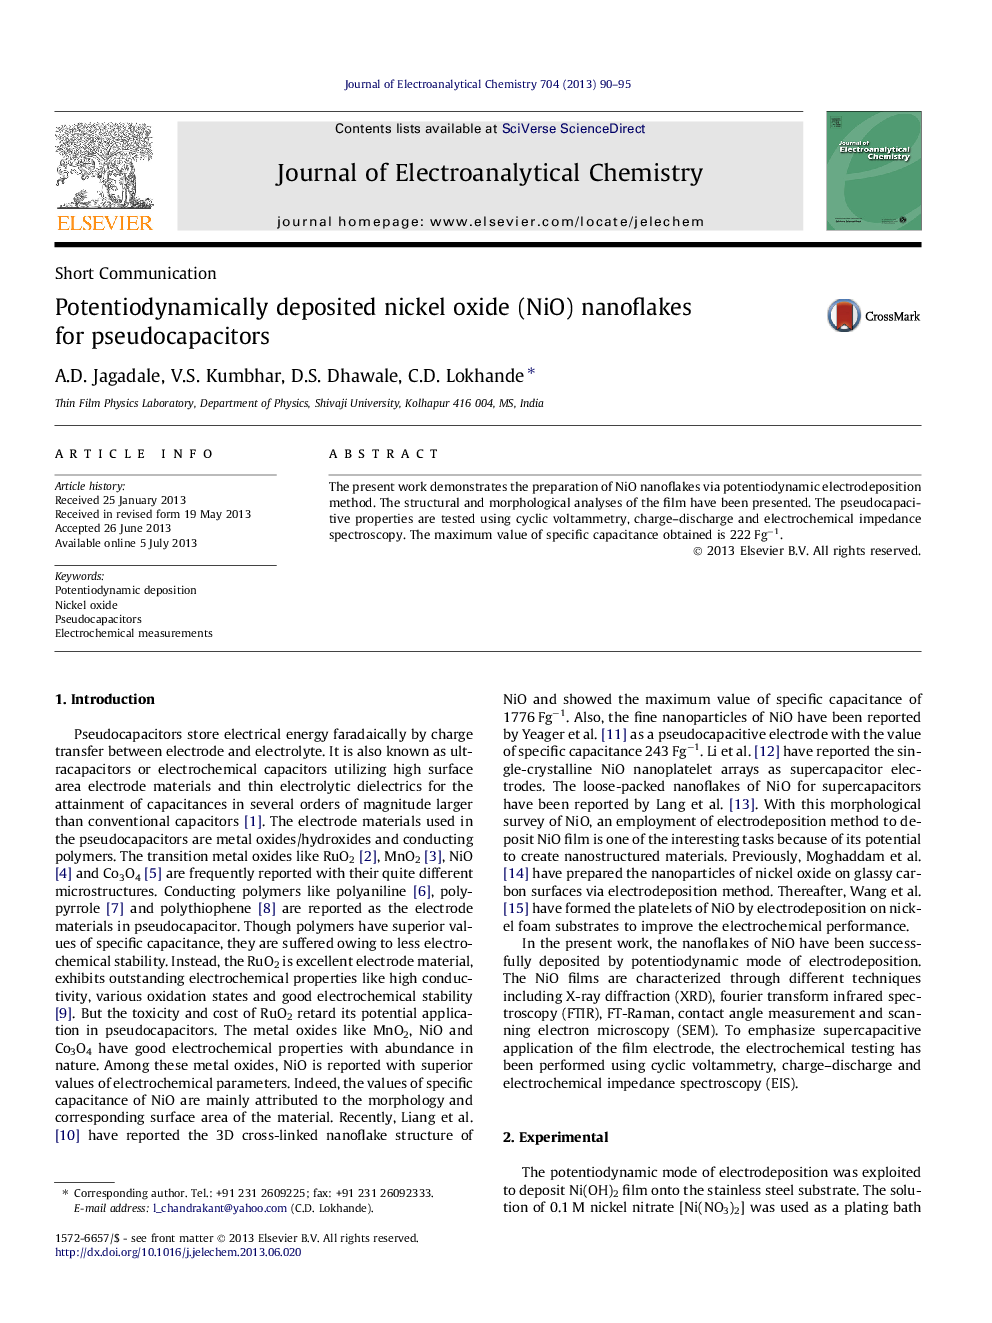 Potentiodynamically deposited nickel oxide (NiO) nanoflakes for pseudocapacitors